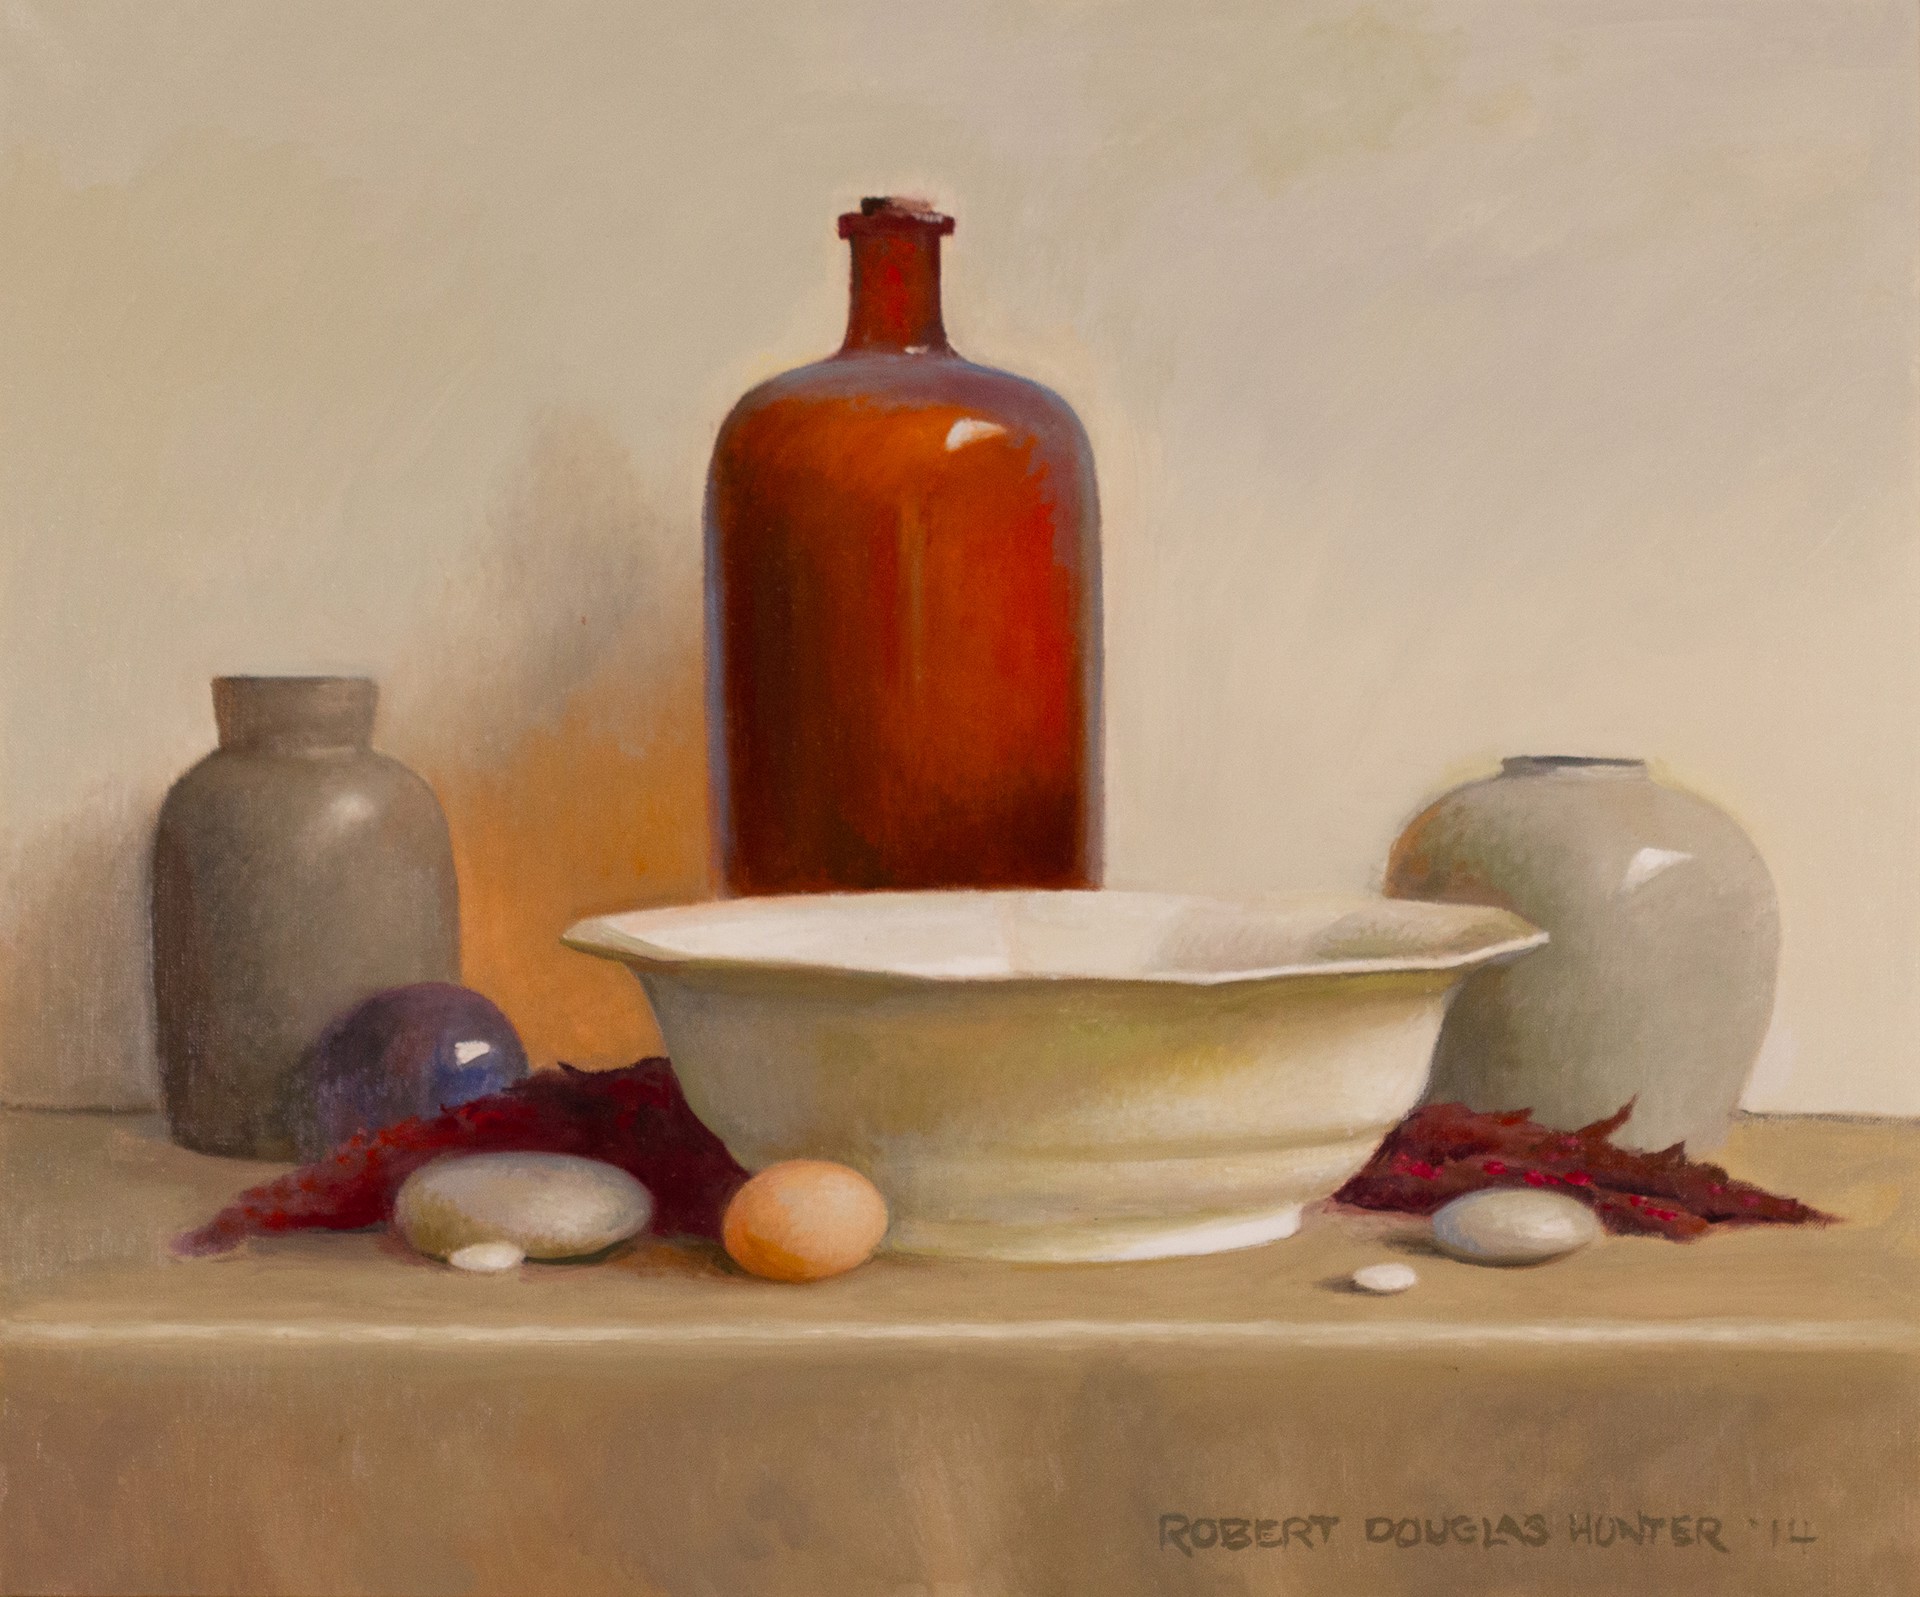 Late May "Arrangement with an Egg" by Robert Douglas Hunter